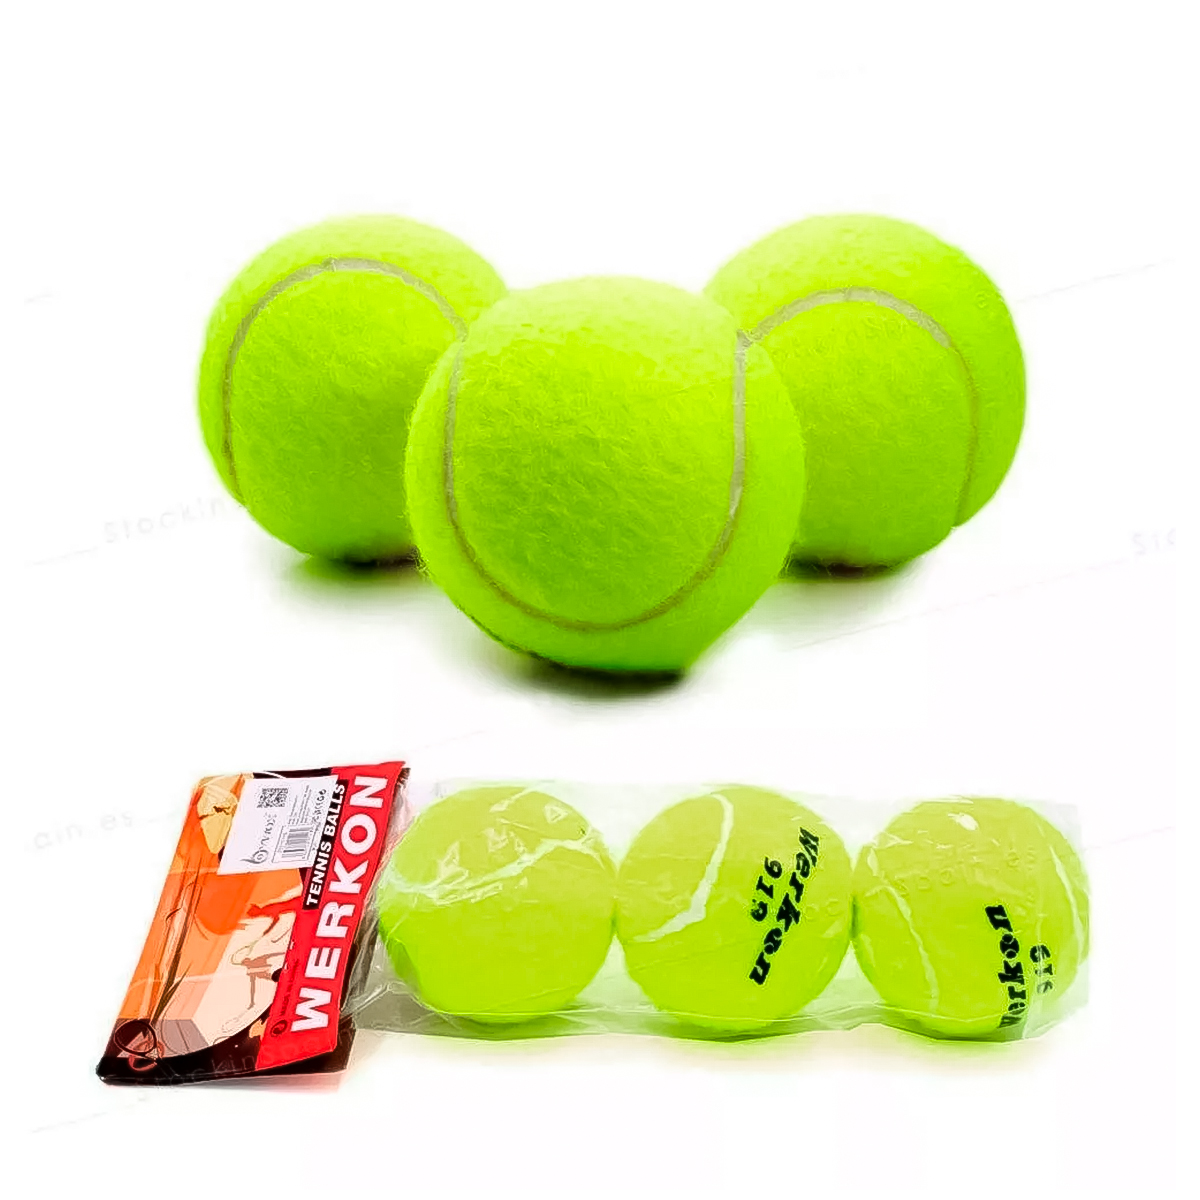 Set de pelotas sonoras de Tenis